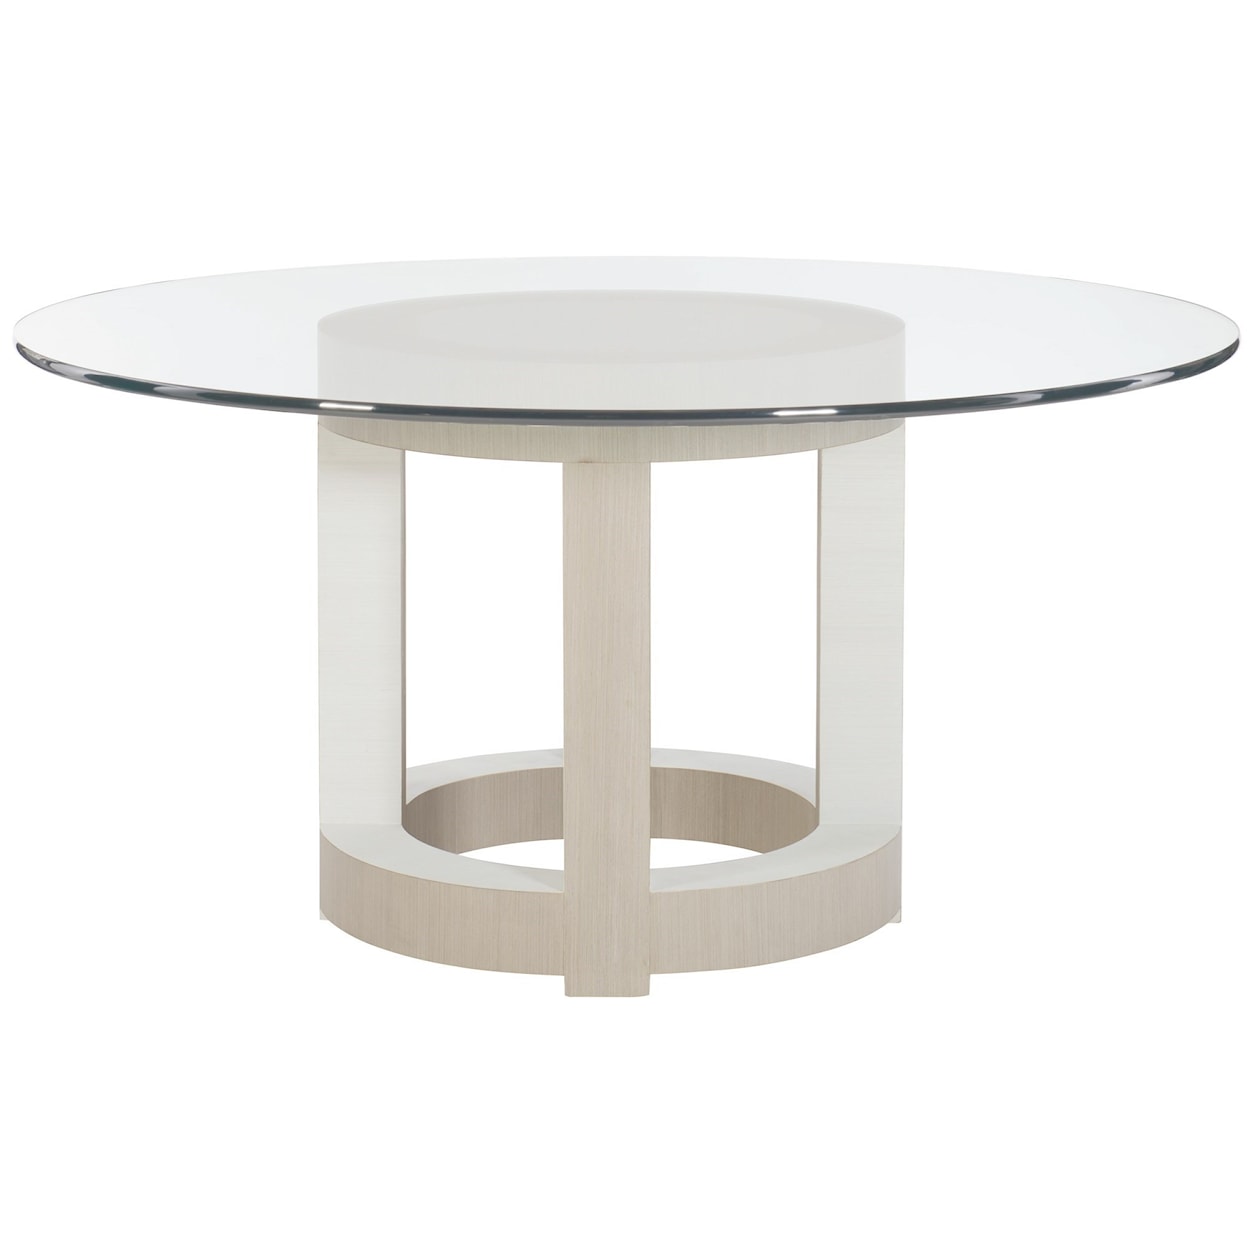 Bernhardt Axiom Round Dining Table